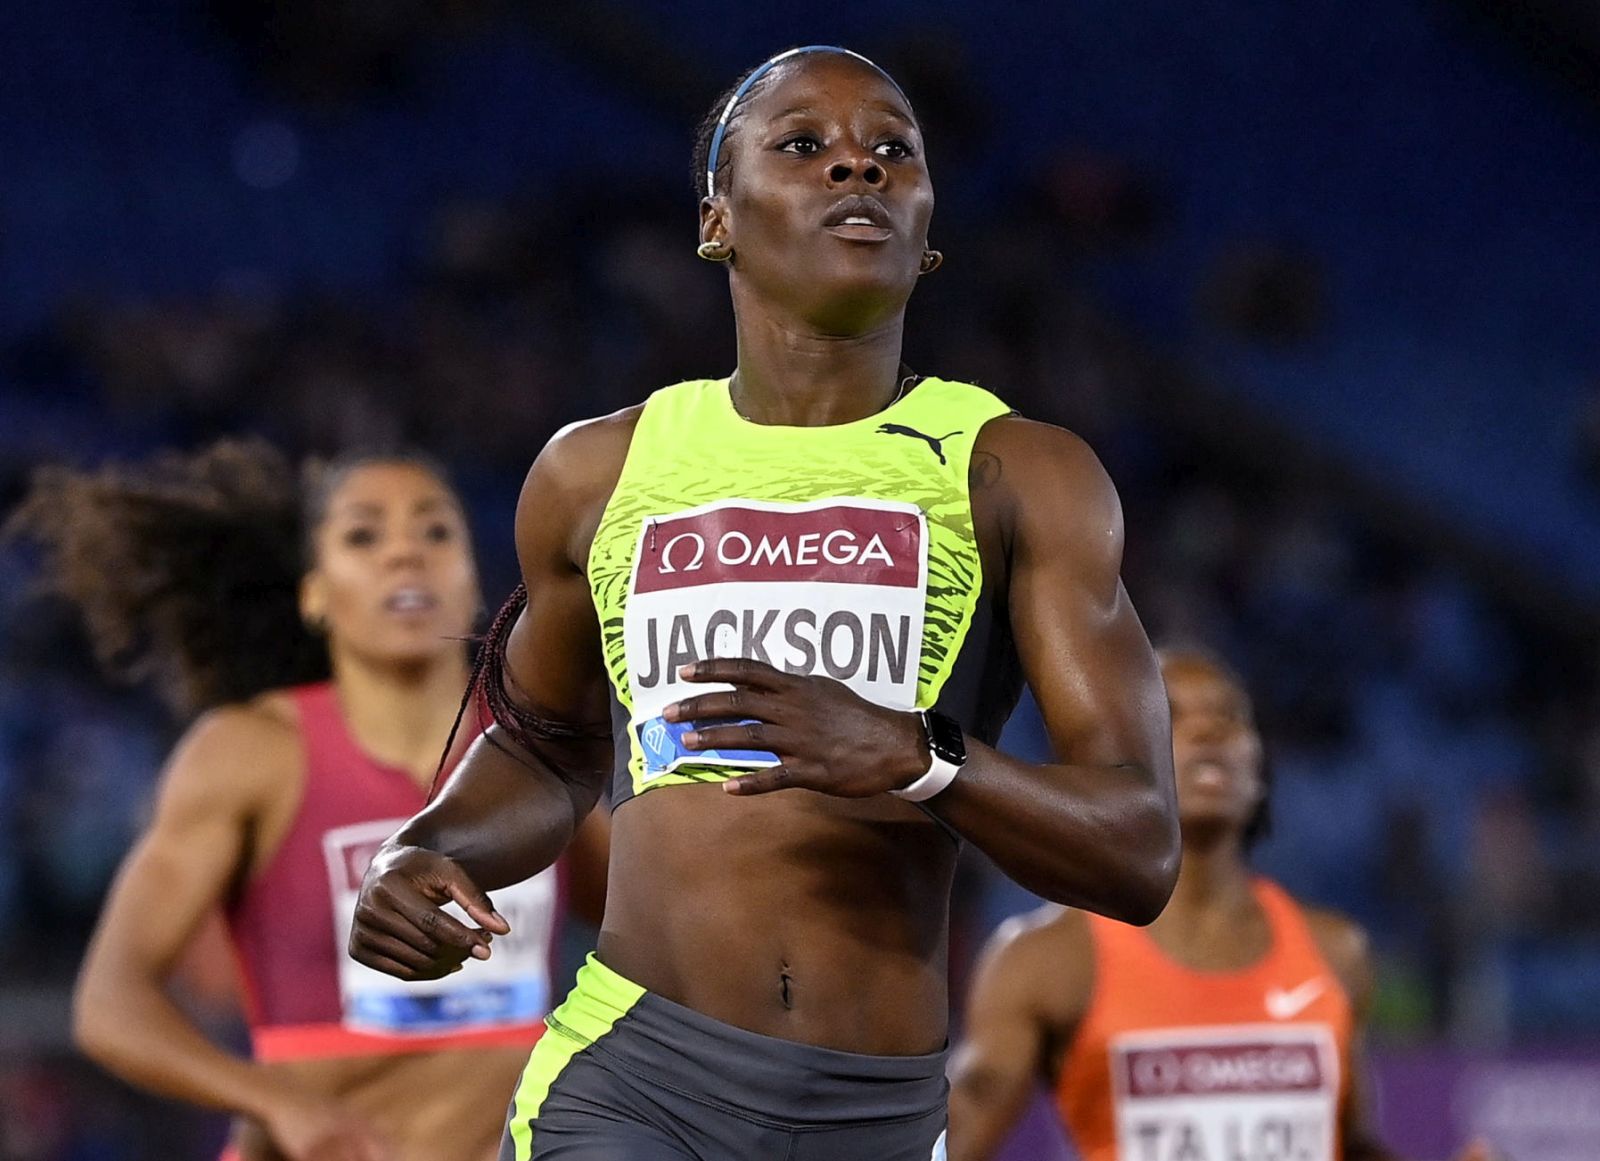 epa10004687 Shericka Jackson (C) of Jamaica reacts after winning the women's 200m race of the Diamond League Golden Gala athletics meeting at the Olimpico stadium in Rome, Italy, 09 June 2022.  EPA/Riccardo Antimiani